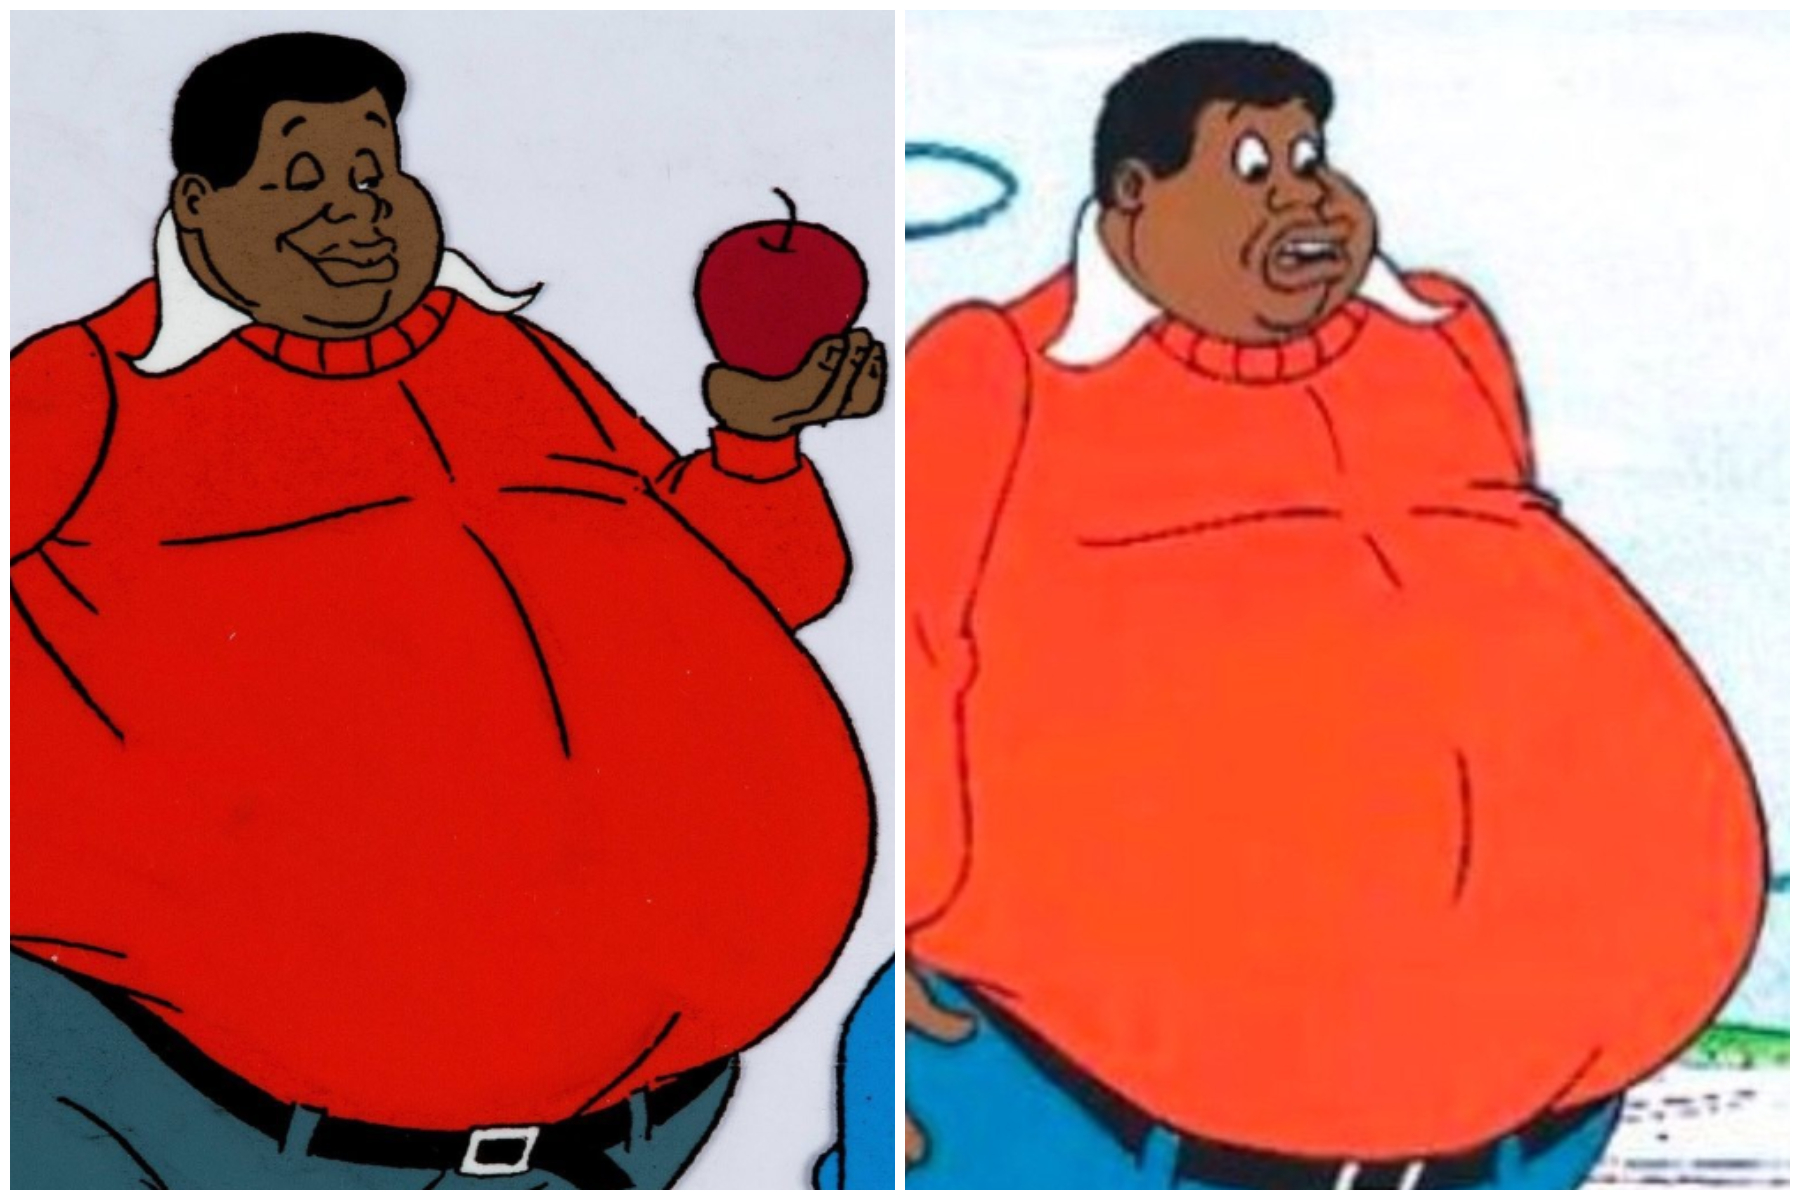 Fat cartoon characters